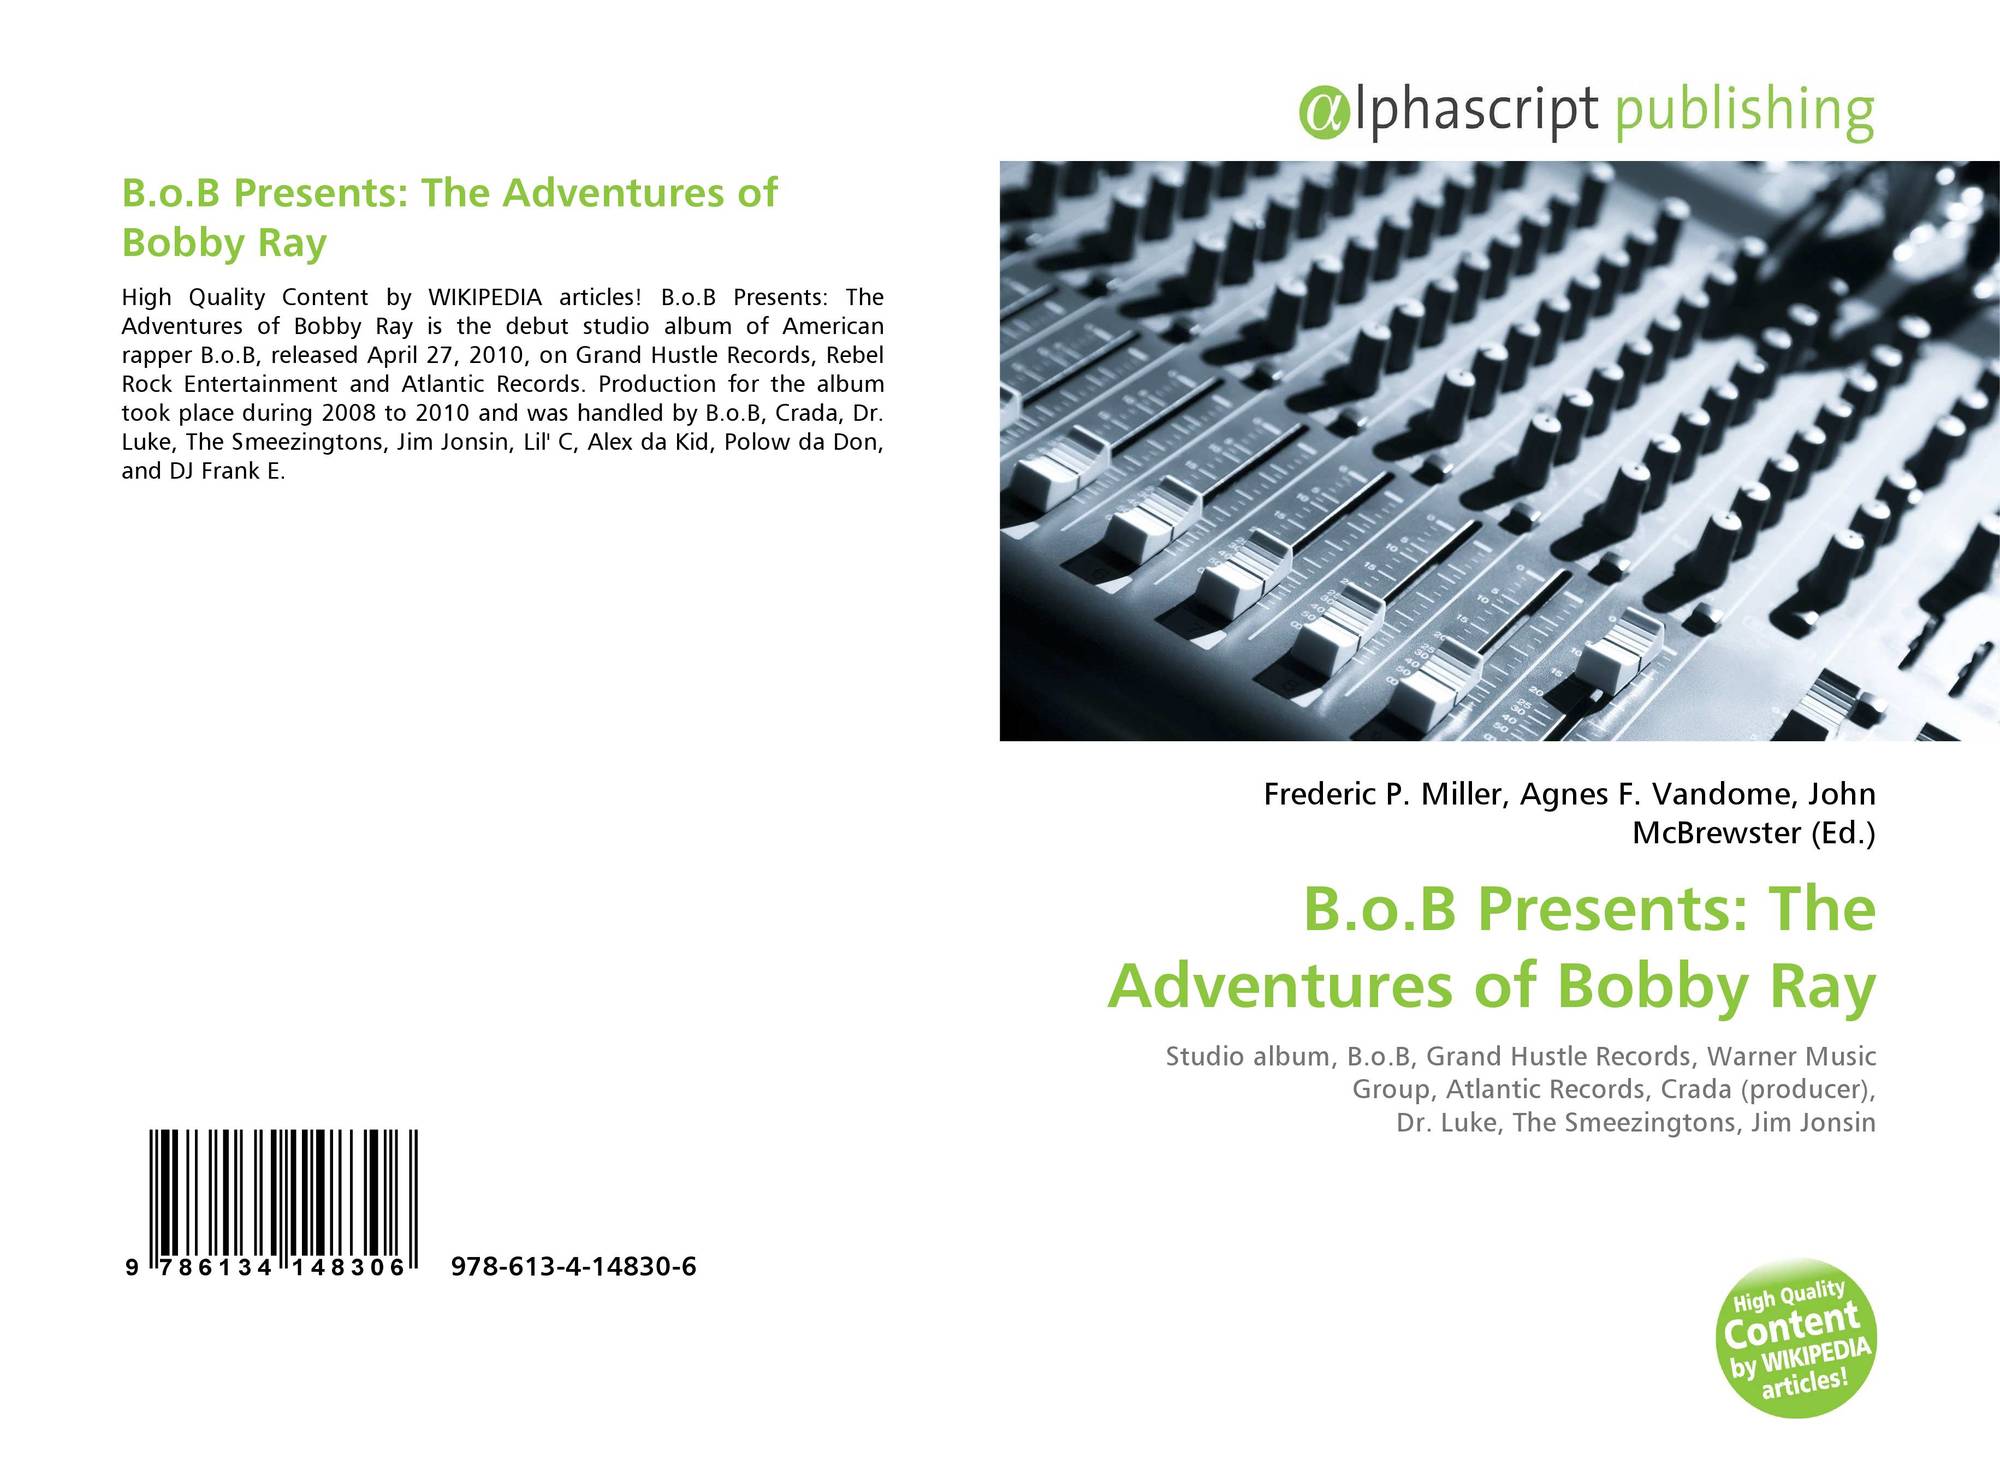 bob presents the adventures of bobby ray album cover